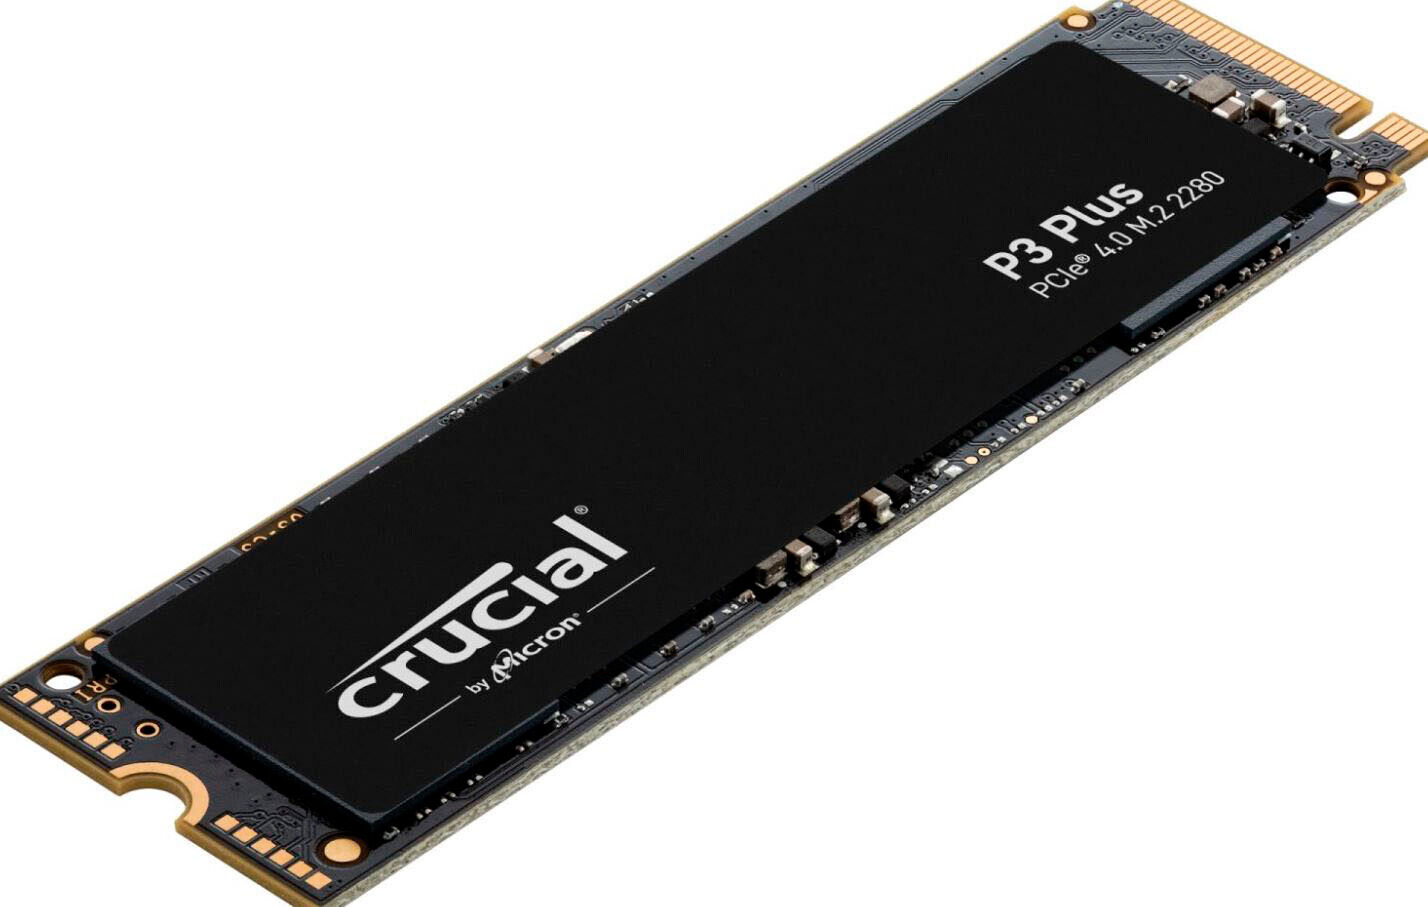 Crucial - P3 1TB Internal SSD PCIe Gen 3 x4 NVMe